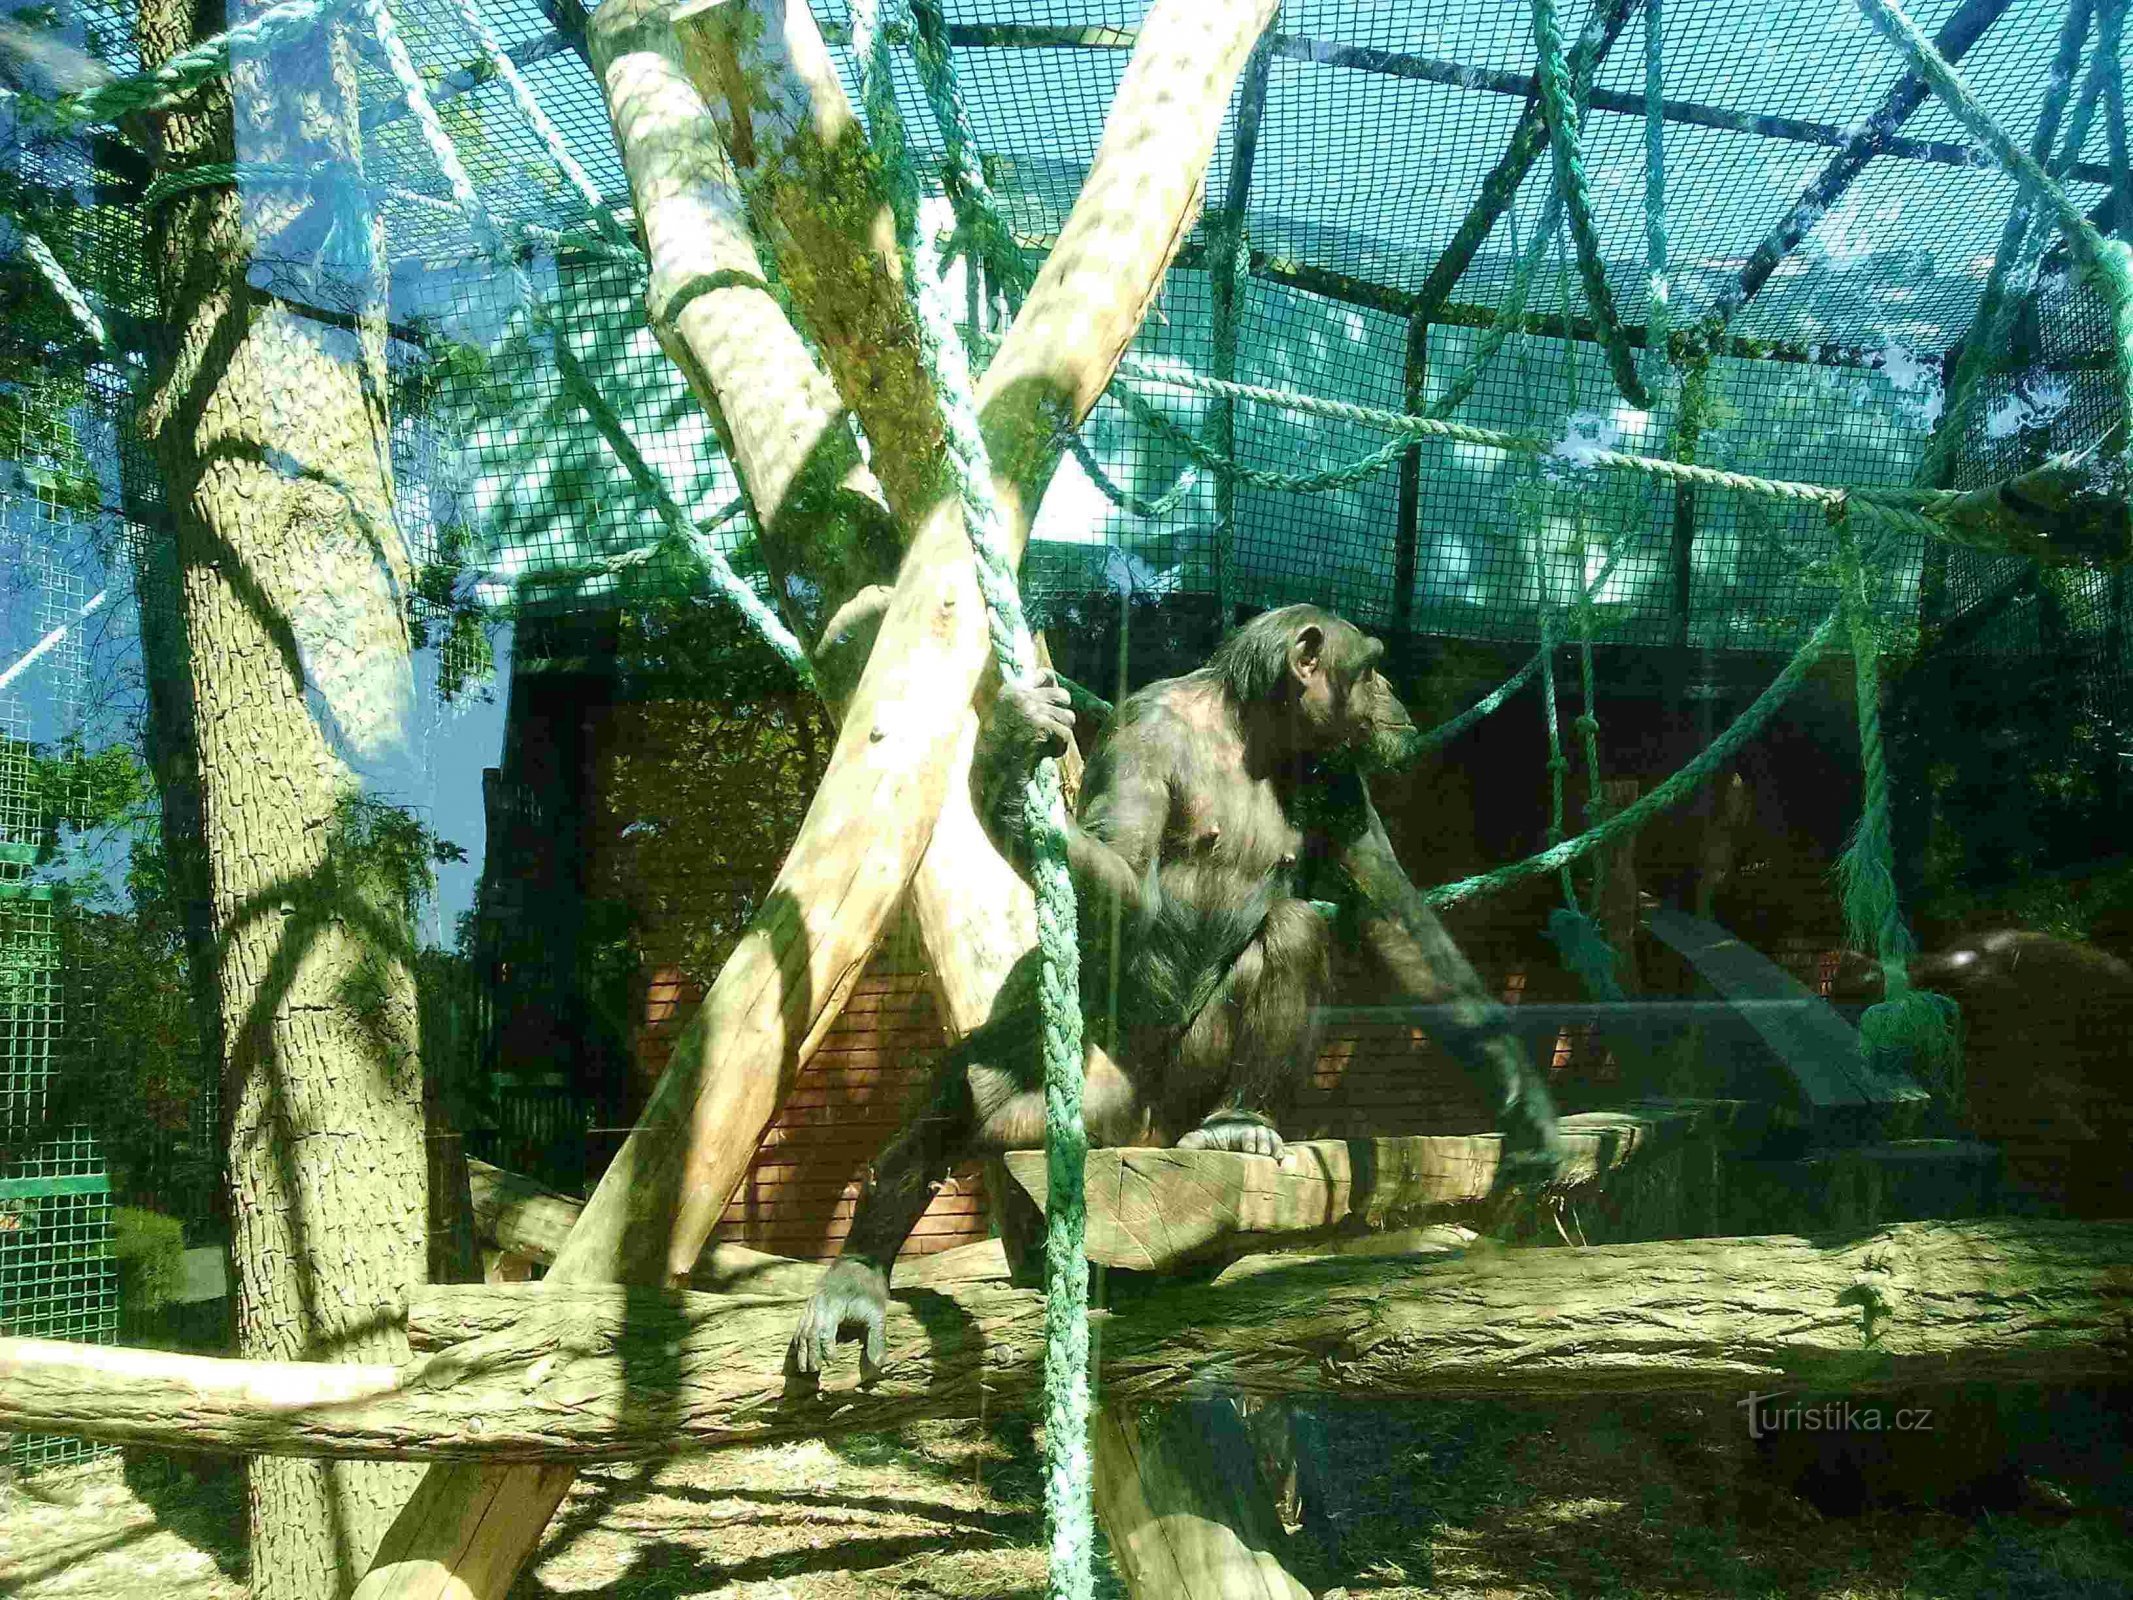 Zoo Hodonín